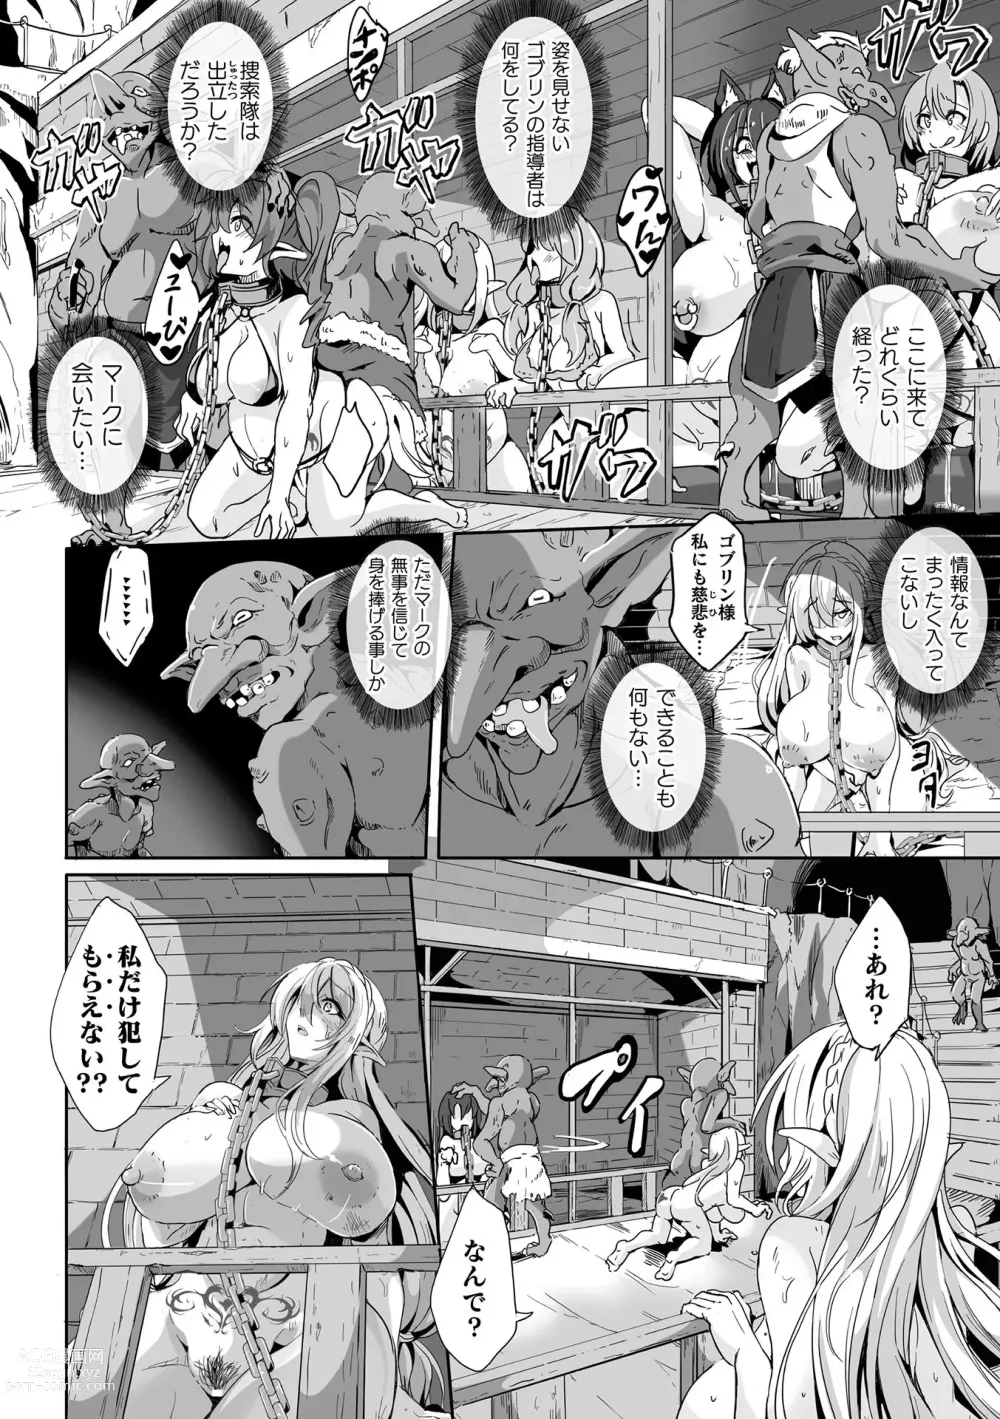 Page 12 of manga Kukkoro Heroines Vol. 28